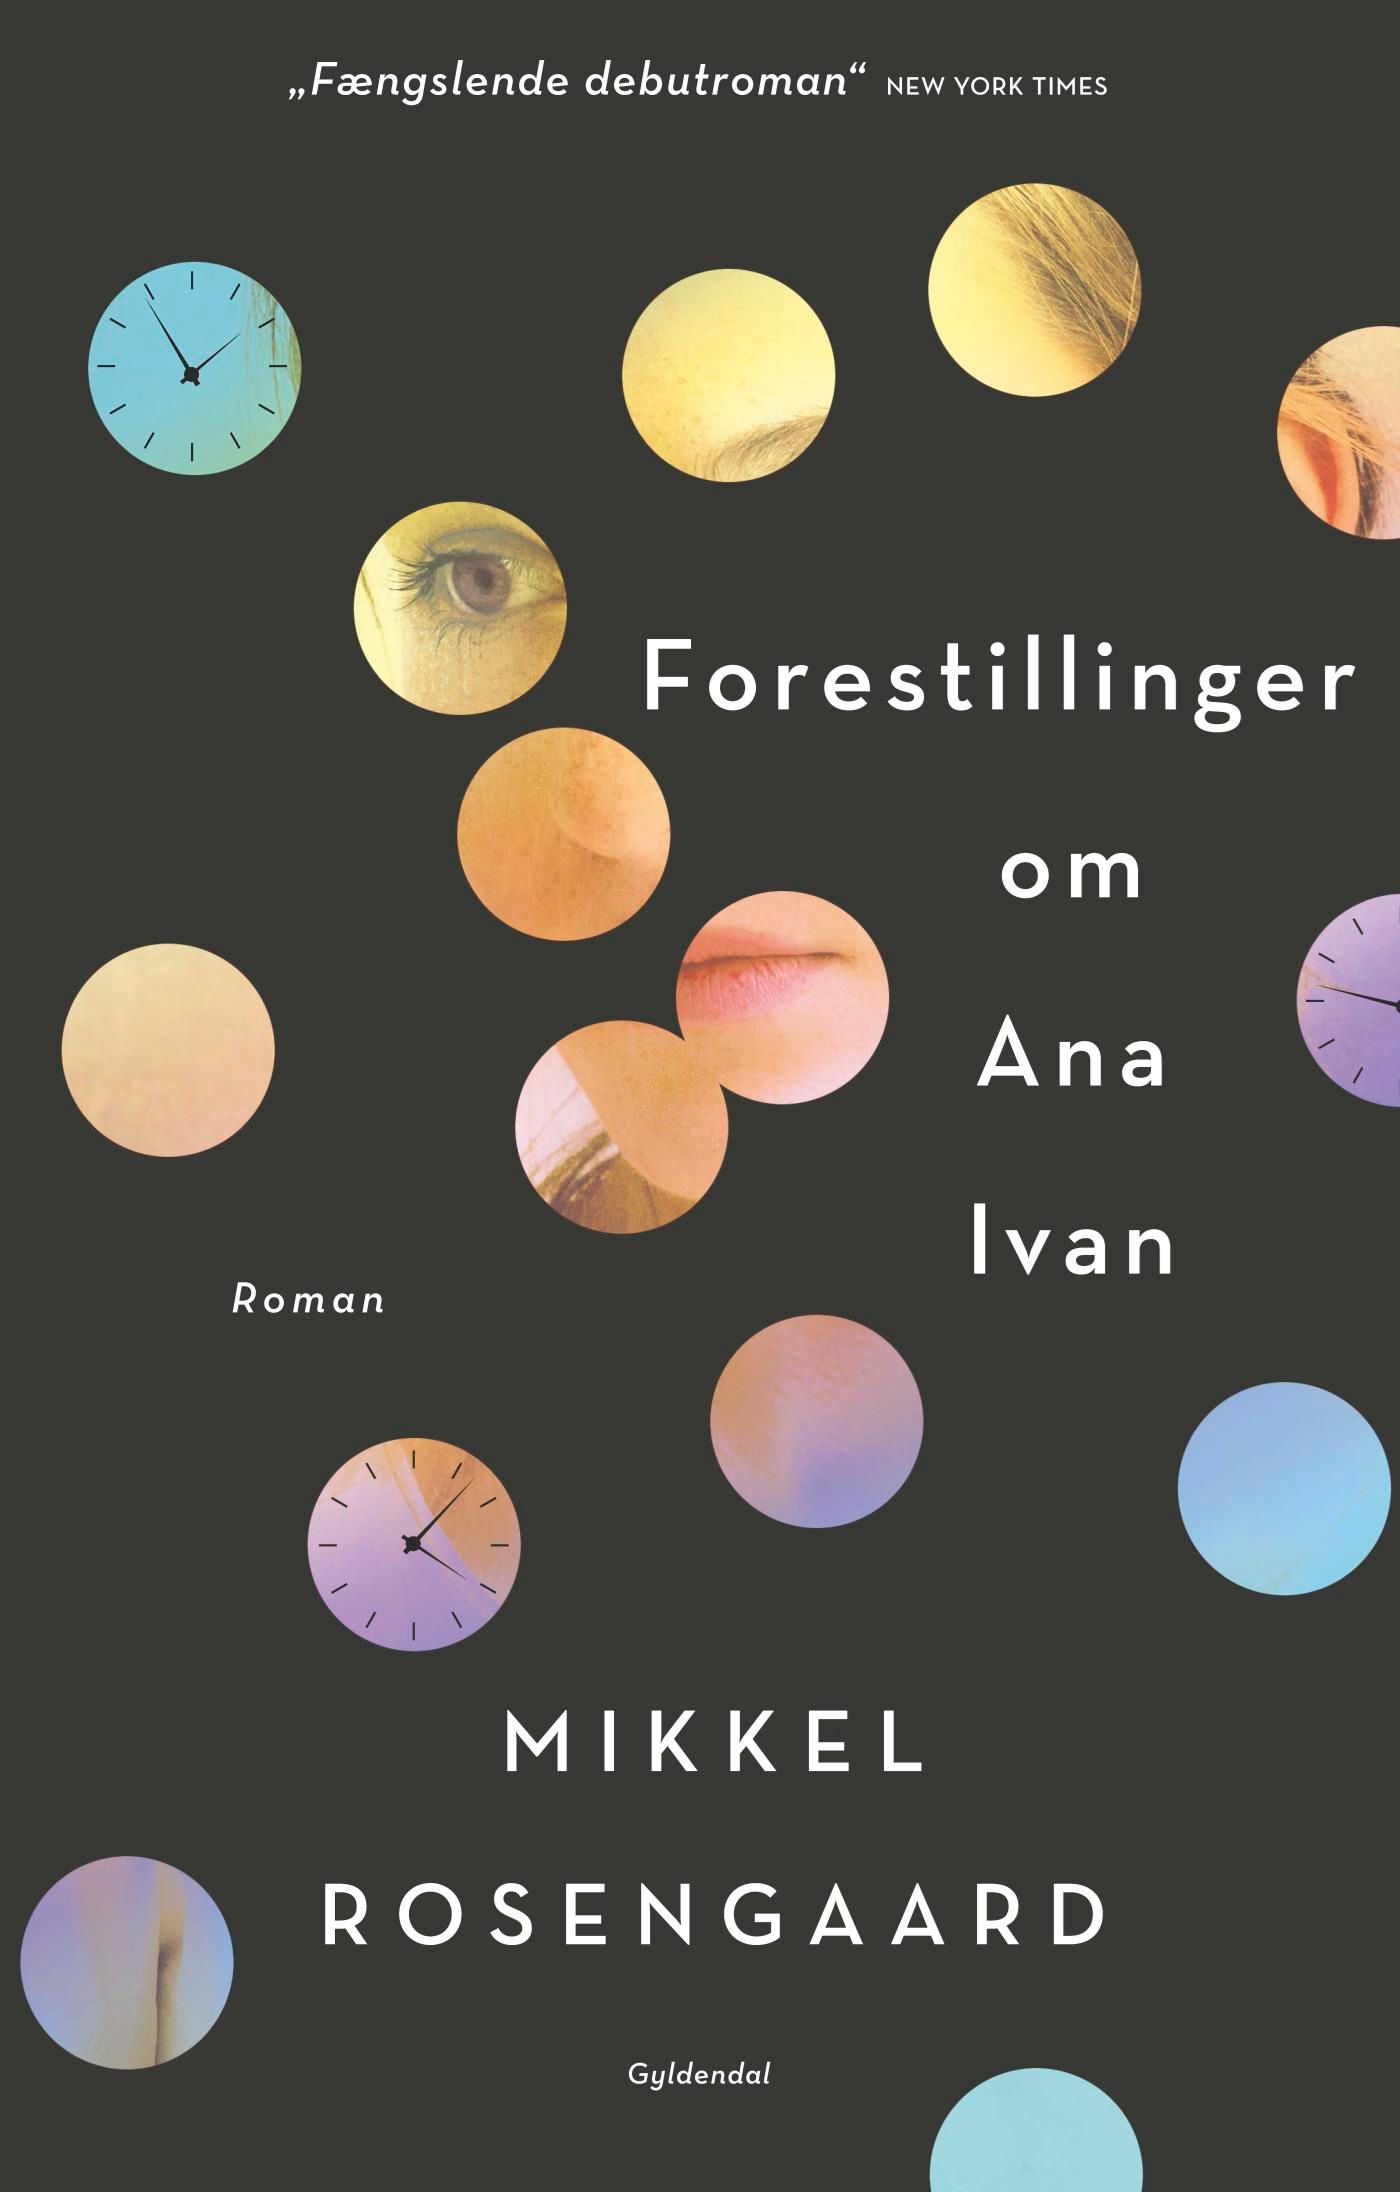 Forestillinger om Ana Ivan, eBook by Mikkel Rosengaard